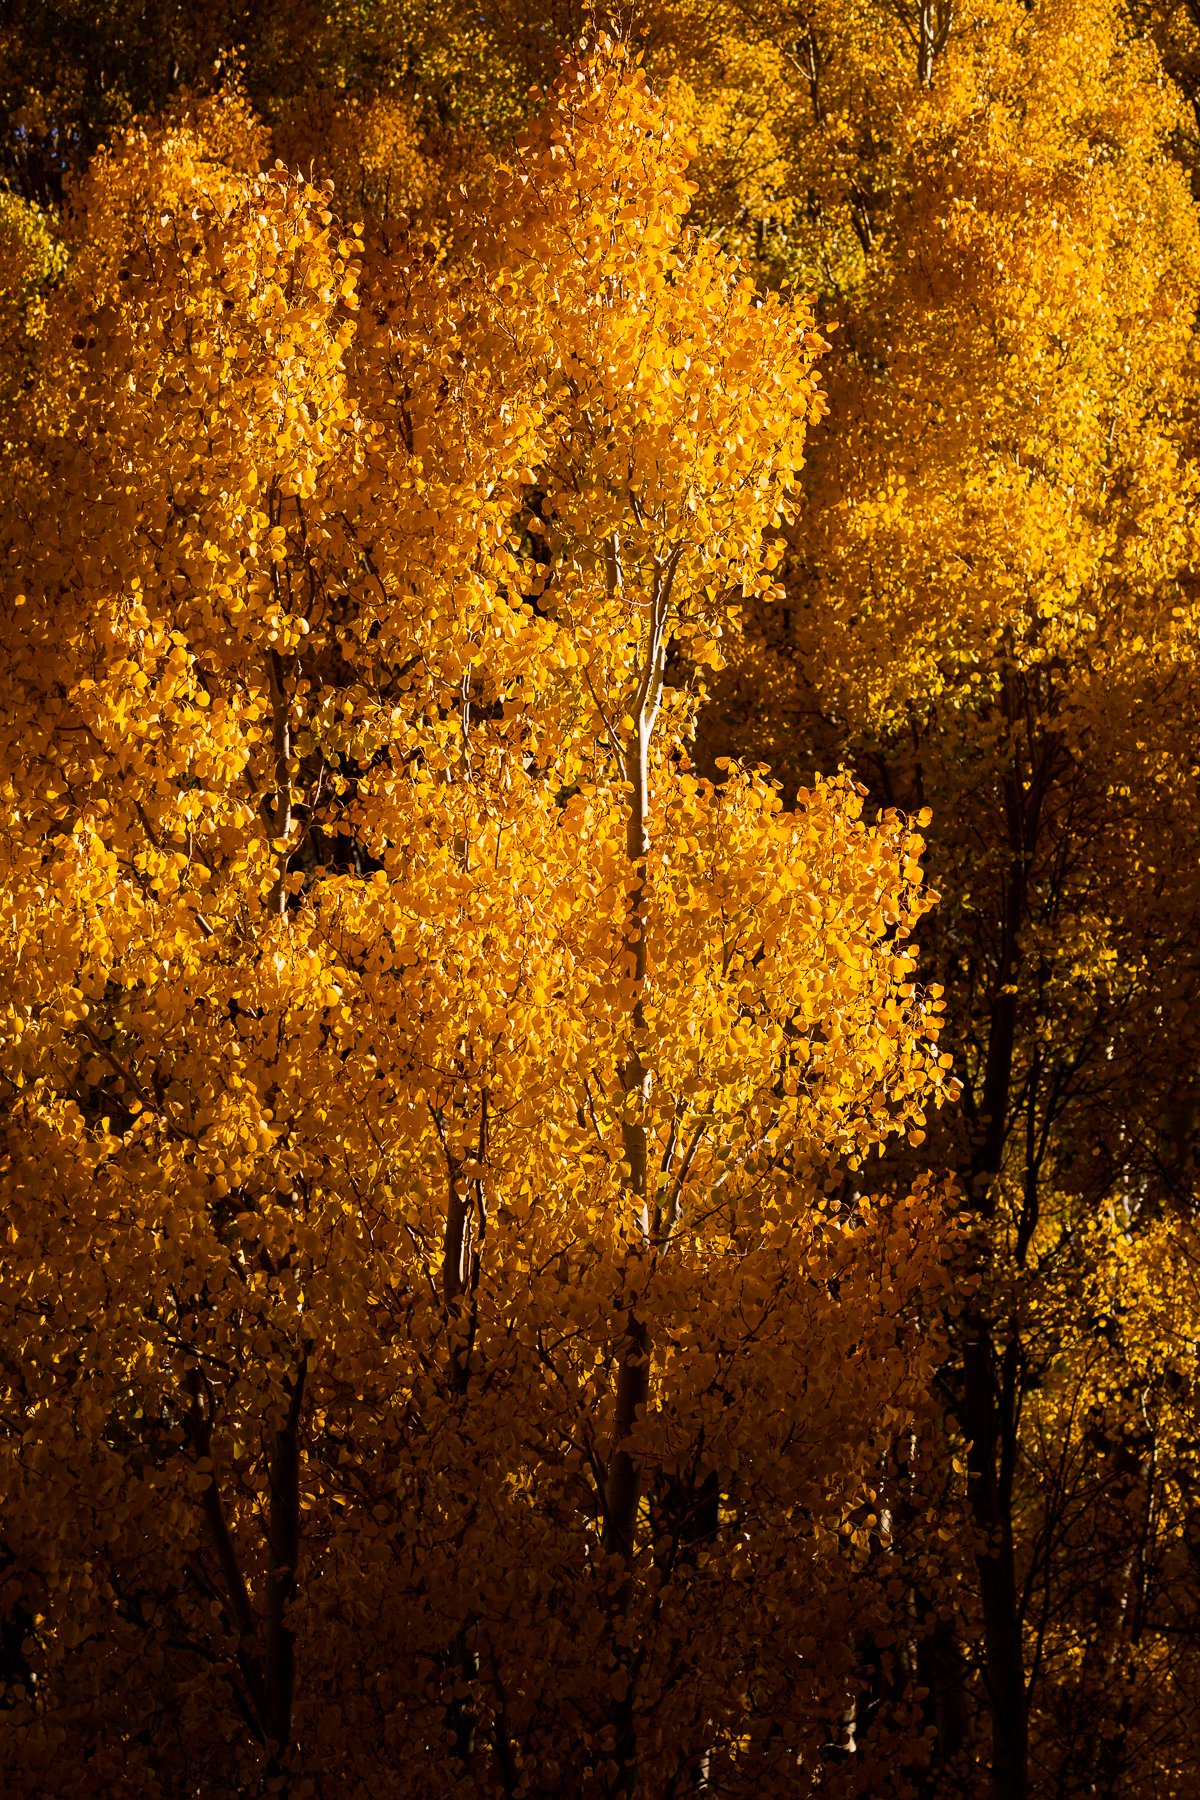 aspen-trees-autumn-leaf-peeping-yellow-orange-light-yosemite-national-park-tioga-pass-road.jpg